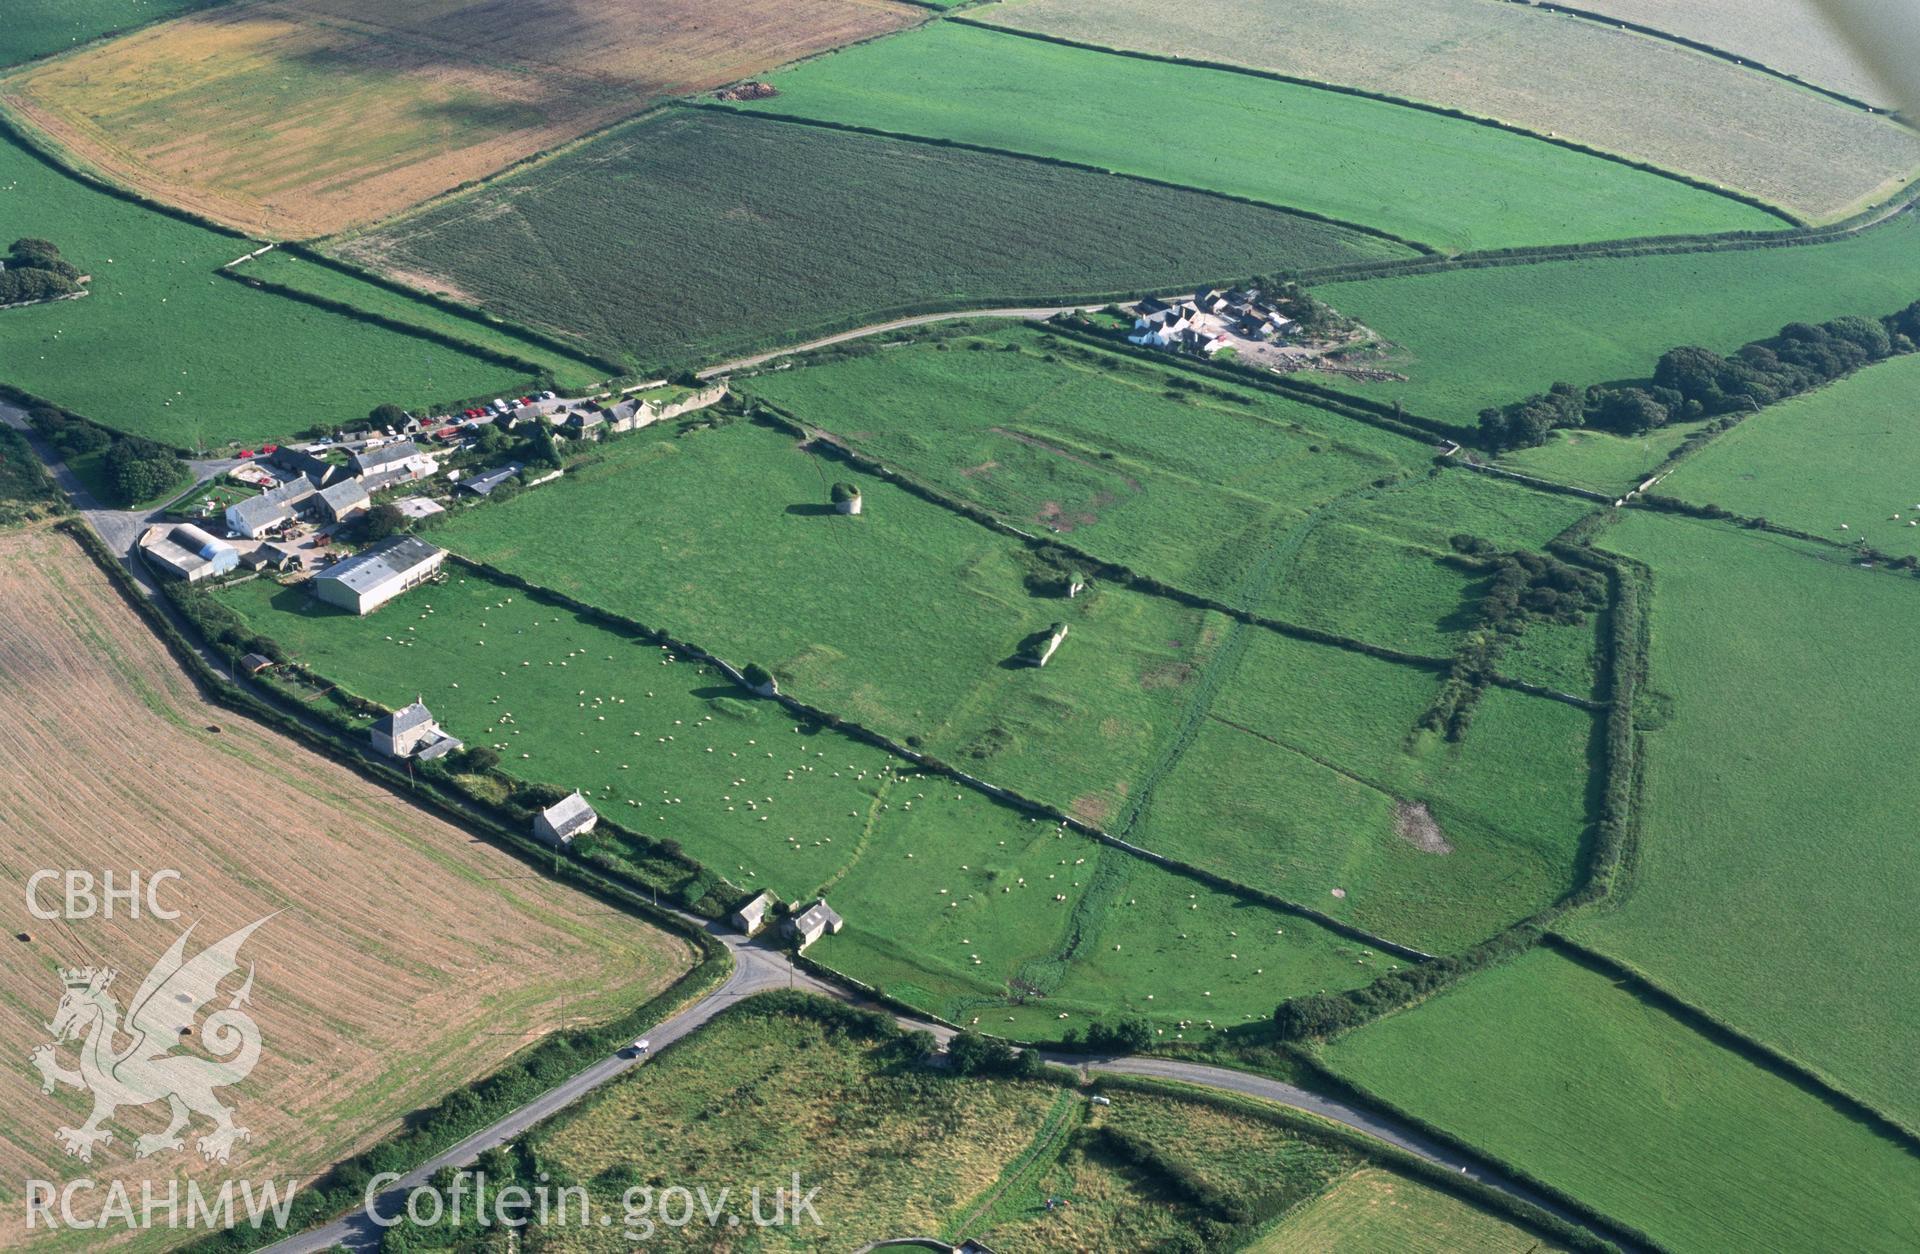 Slide of RCAHMW colour oblique aerial photograph of Monknash Grange, taken by T.G. Driver, 5/8/1998.